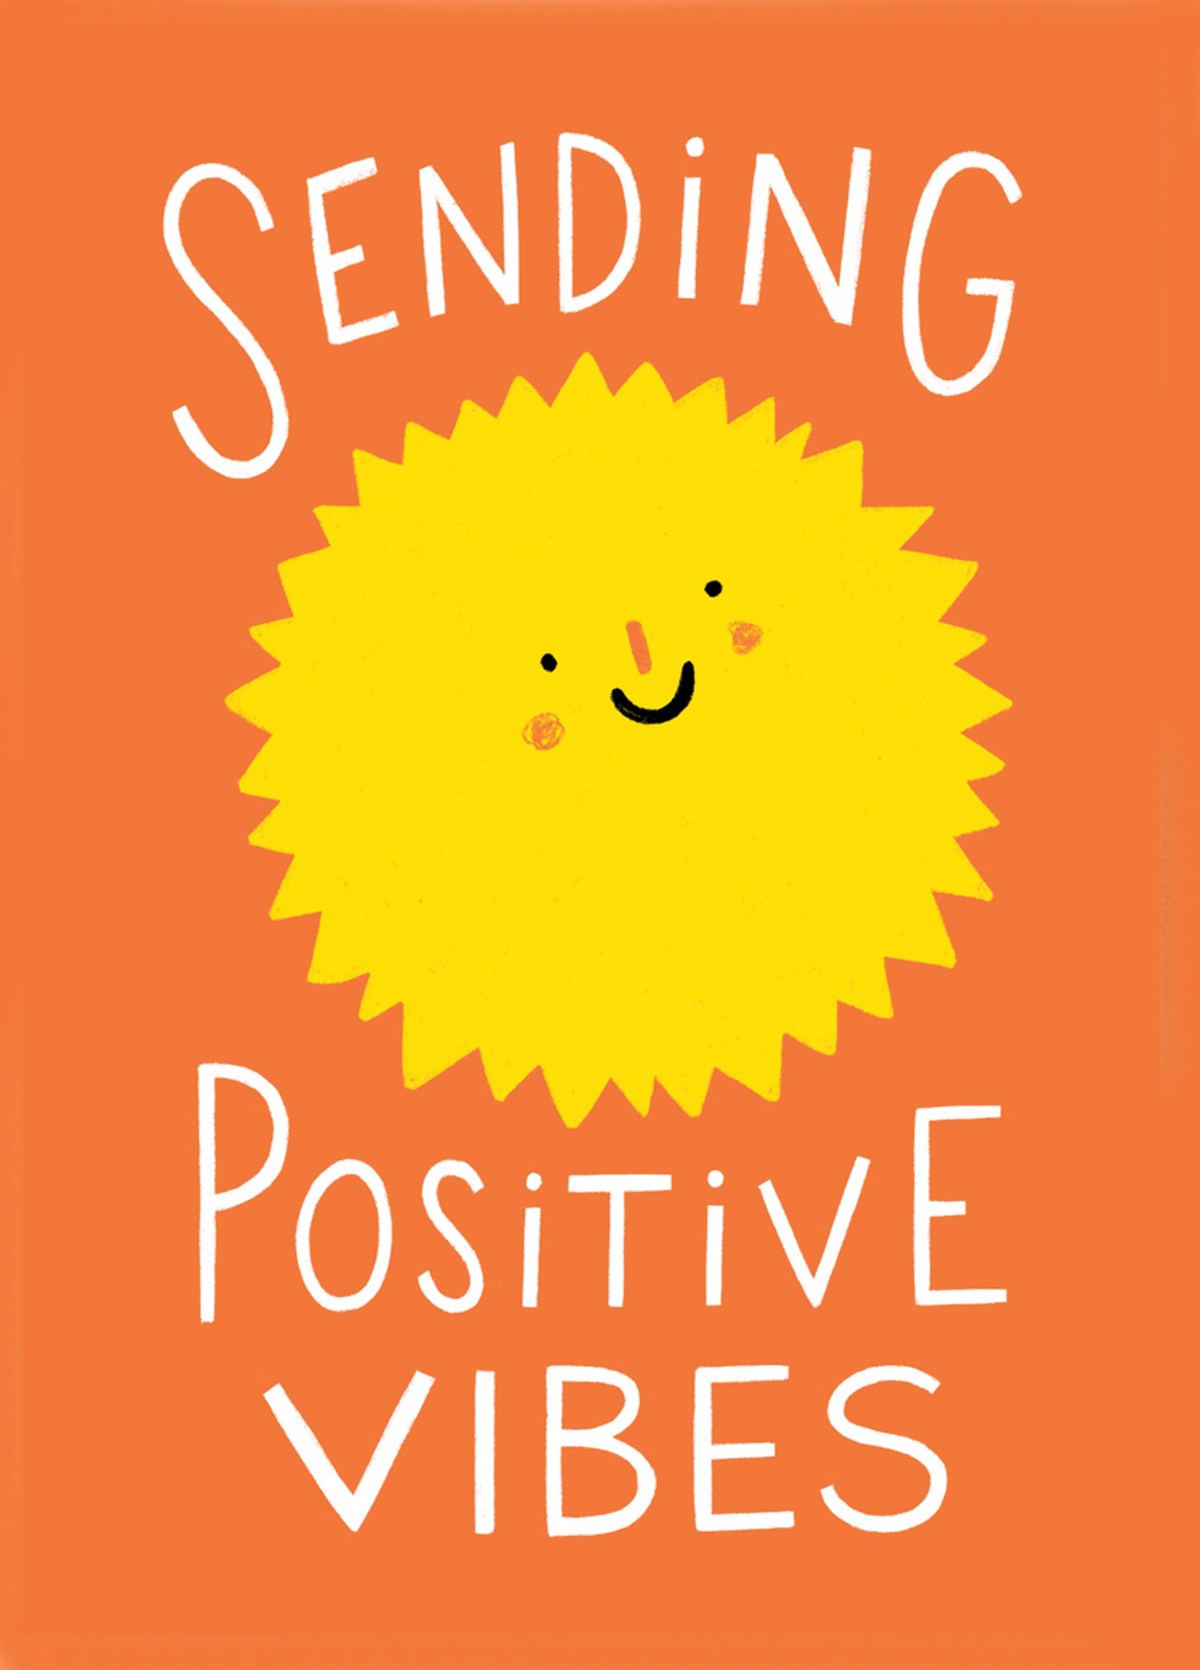 Sending Positive Vibes. Smile! Send ...